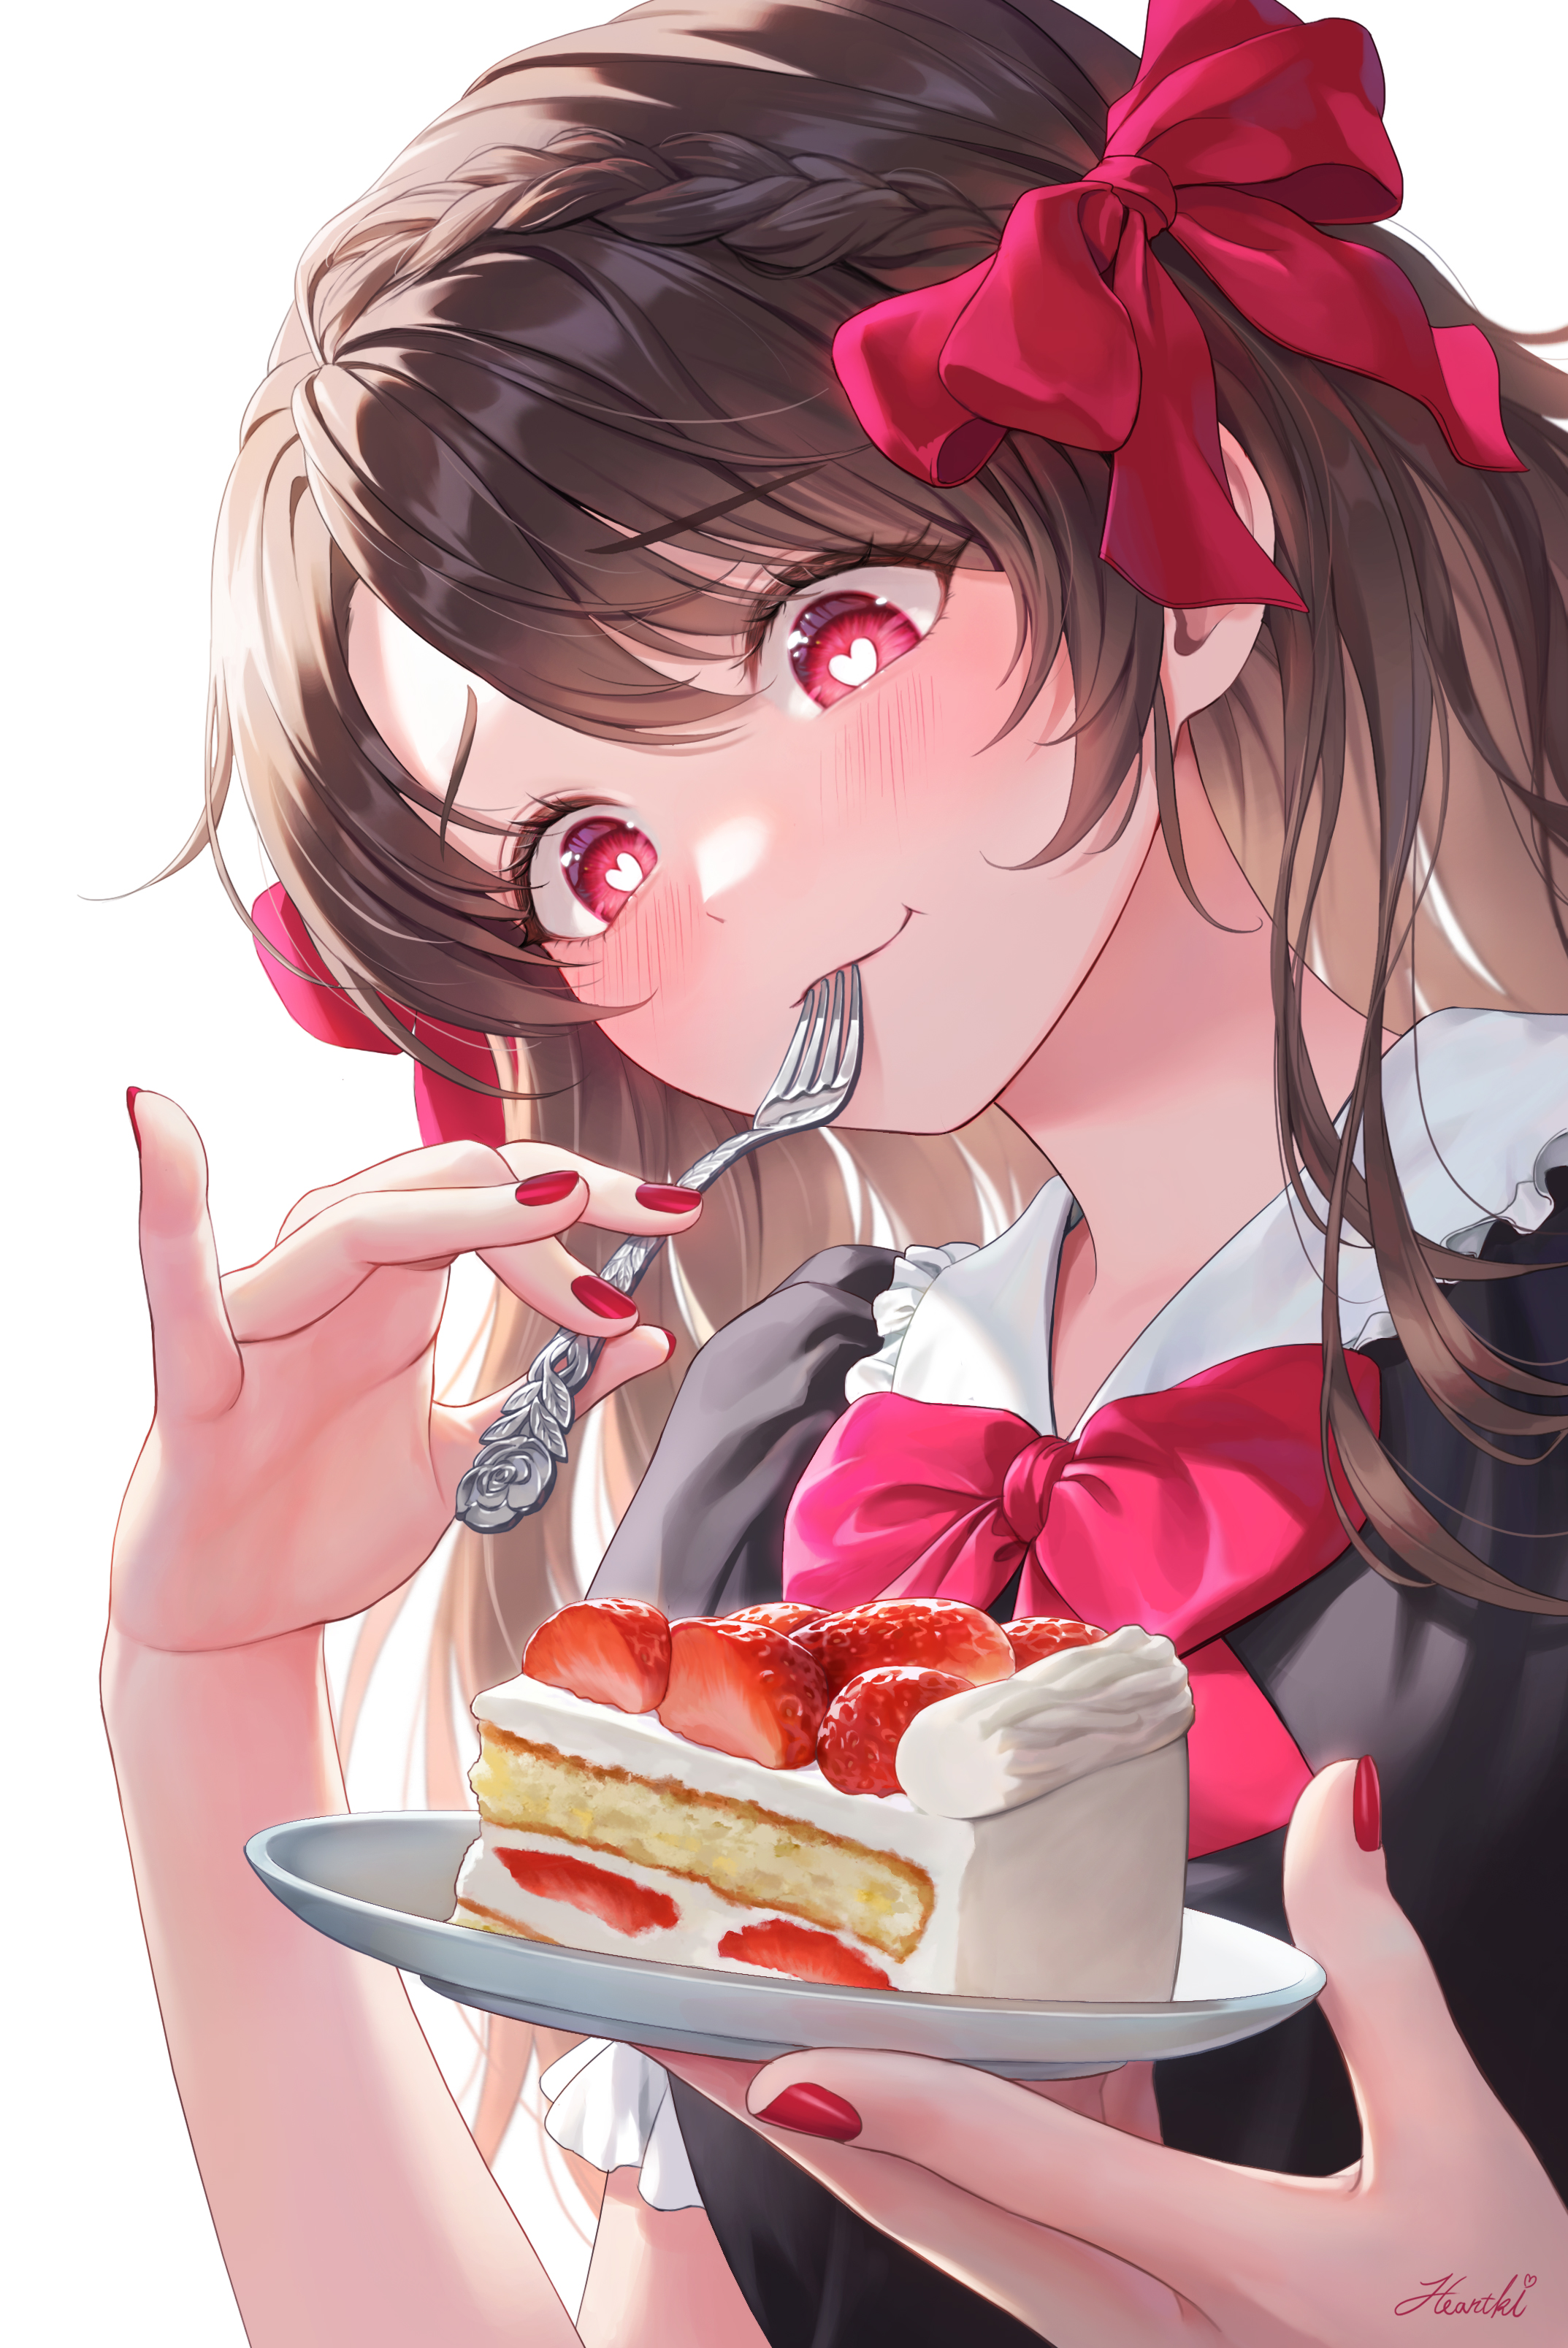 Anime 2147x3215 anime ribbon fork cake nail polish heart eyes eating brunette anime girls strawberries Heartki blushing bow tie smiling sweets food